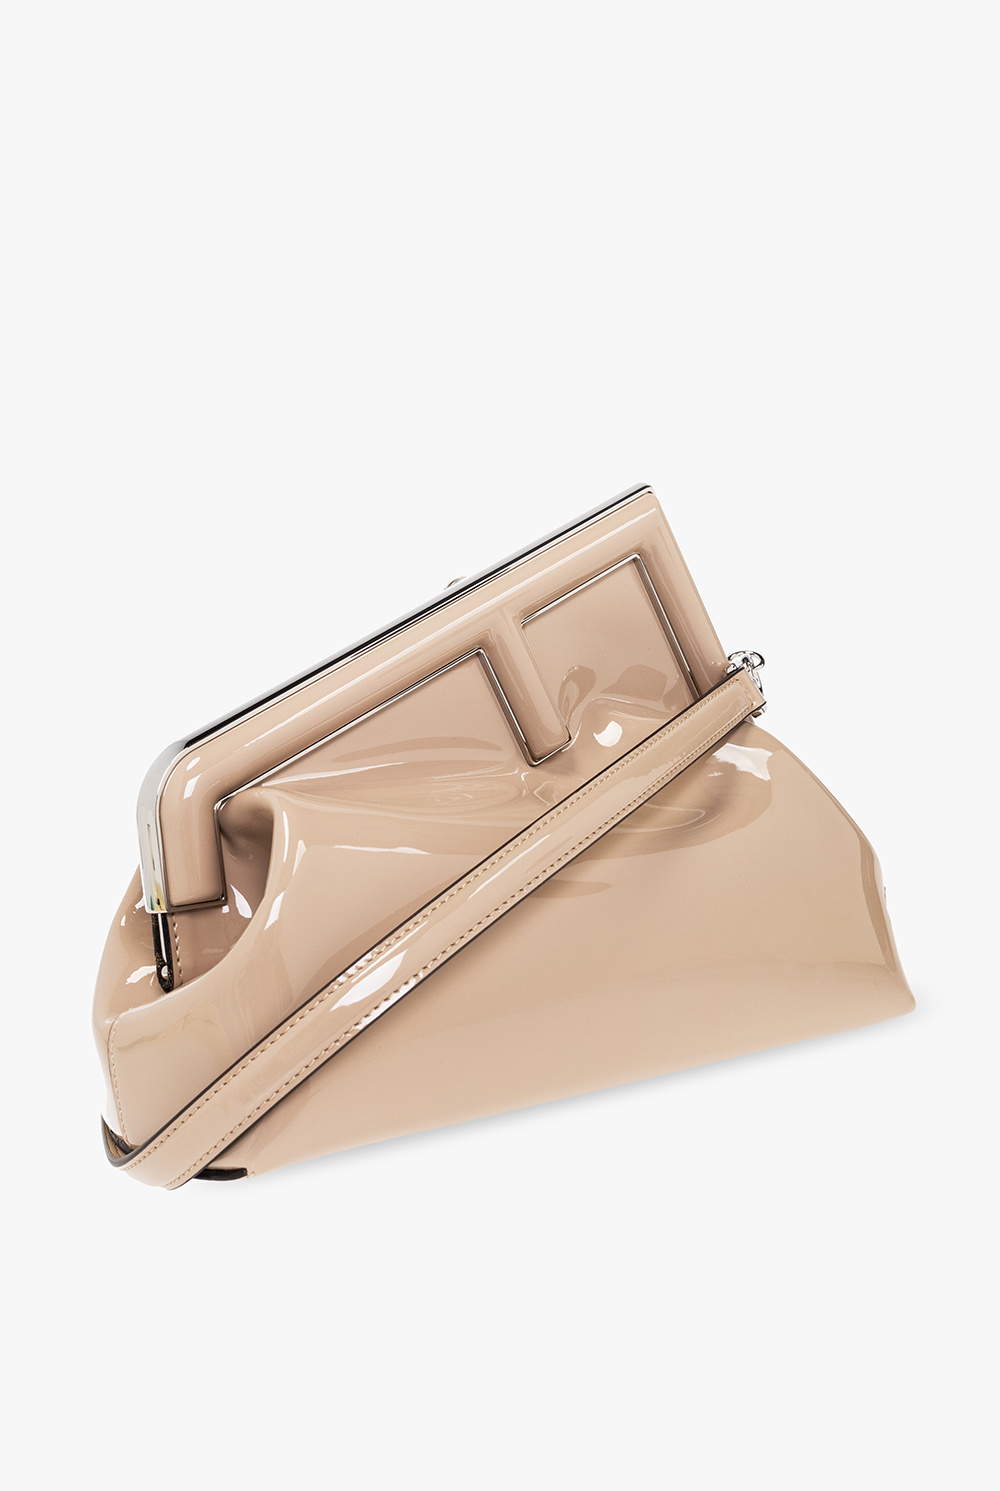 Fendi ‘Fendi First Midi’ shoulder bag